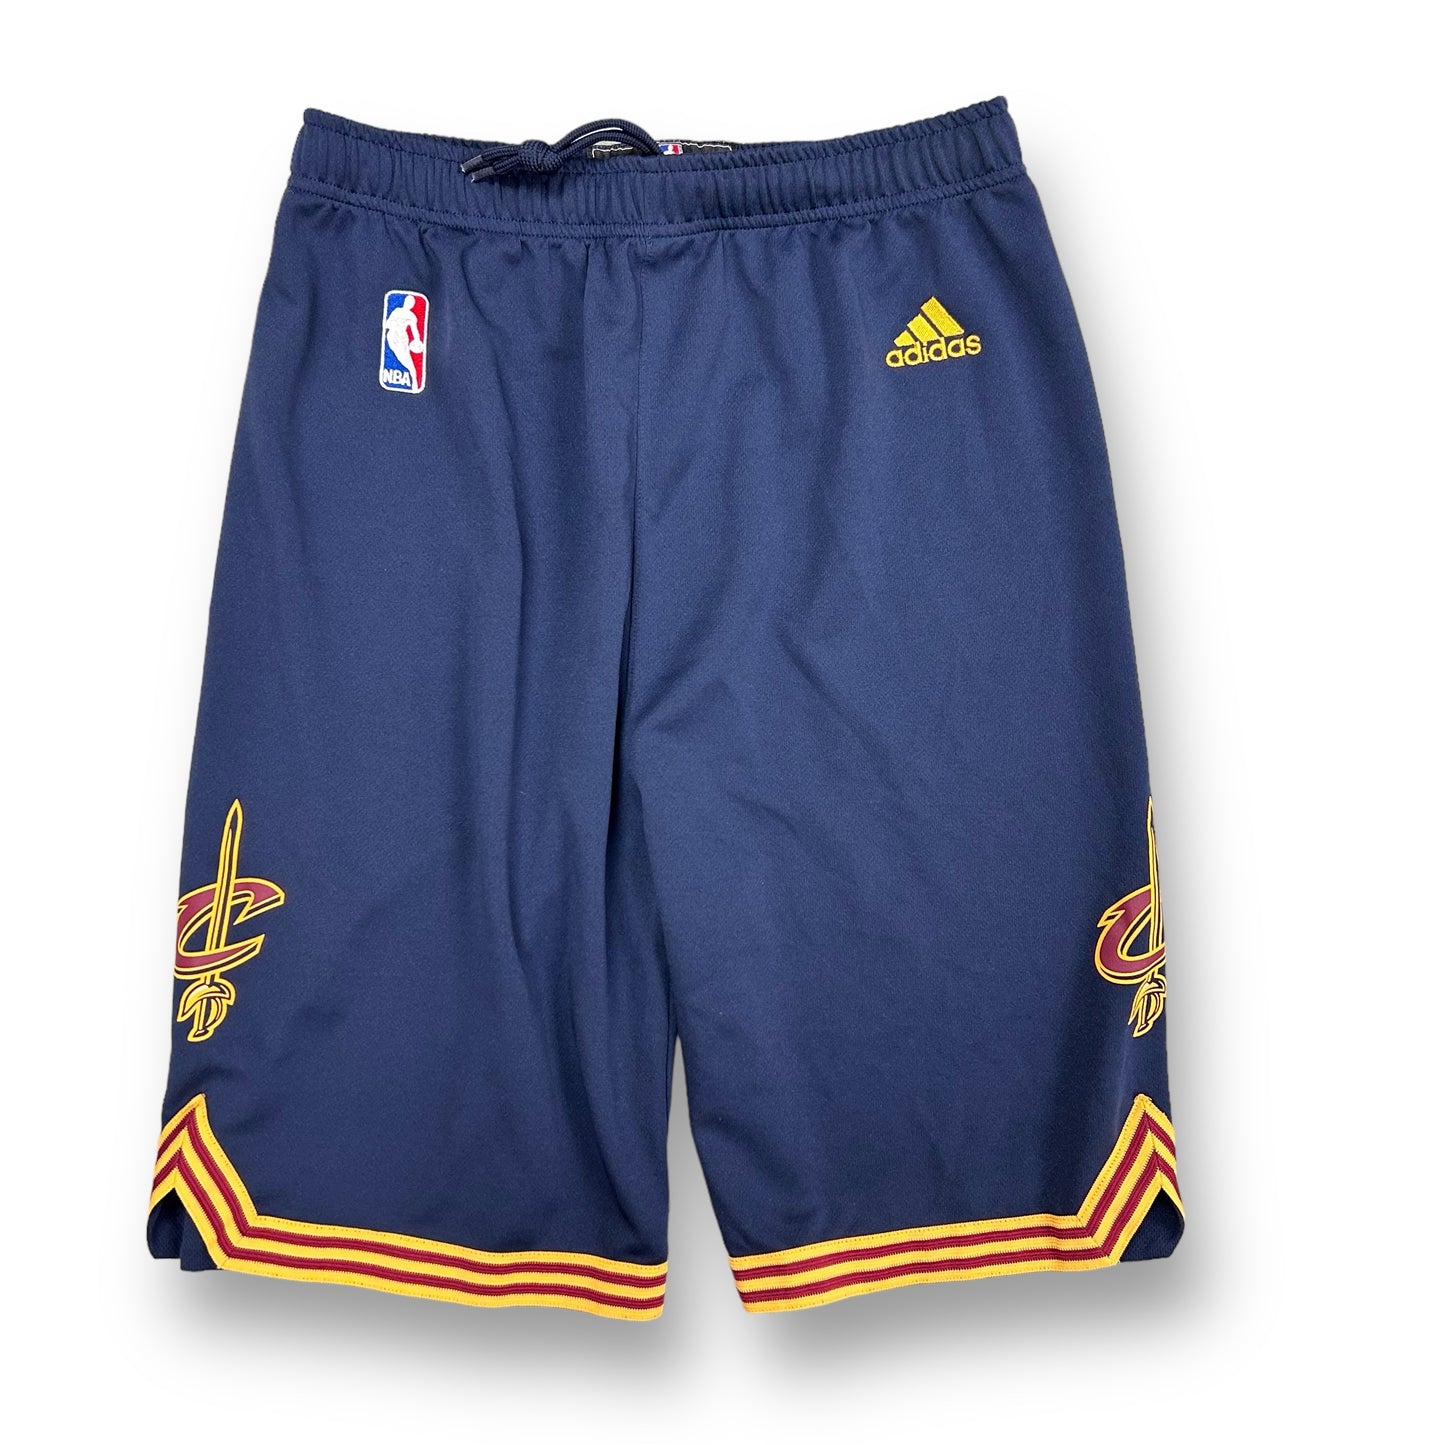 Boys Adidas Size YXL 14/16 Navy NBA Cleveland Cavs Athletic Shorts